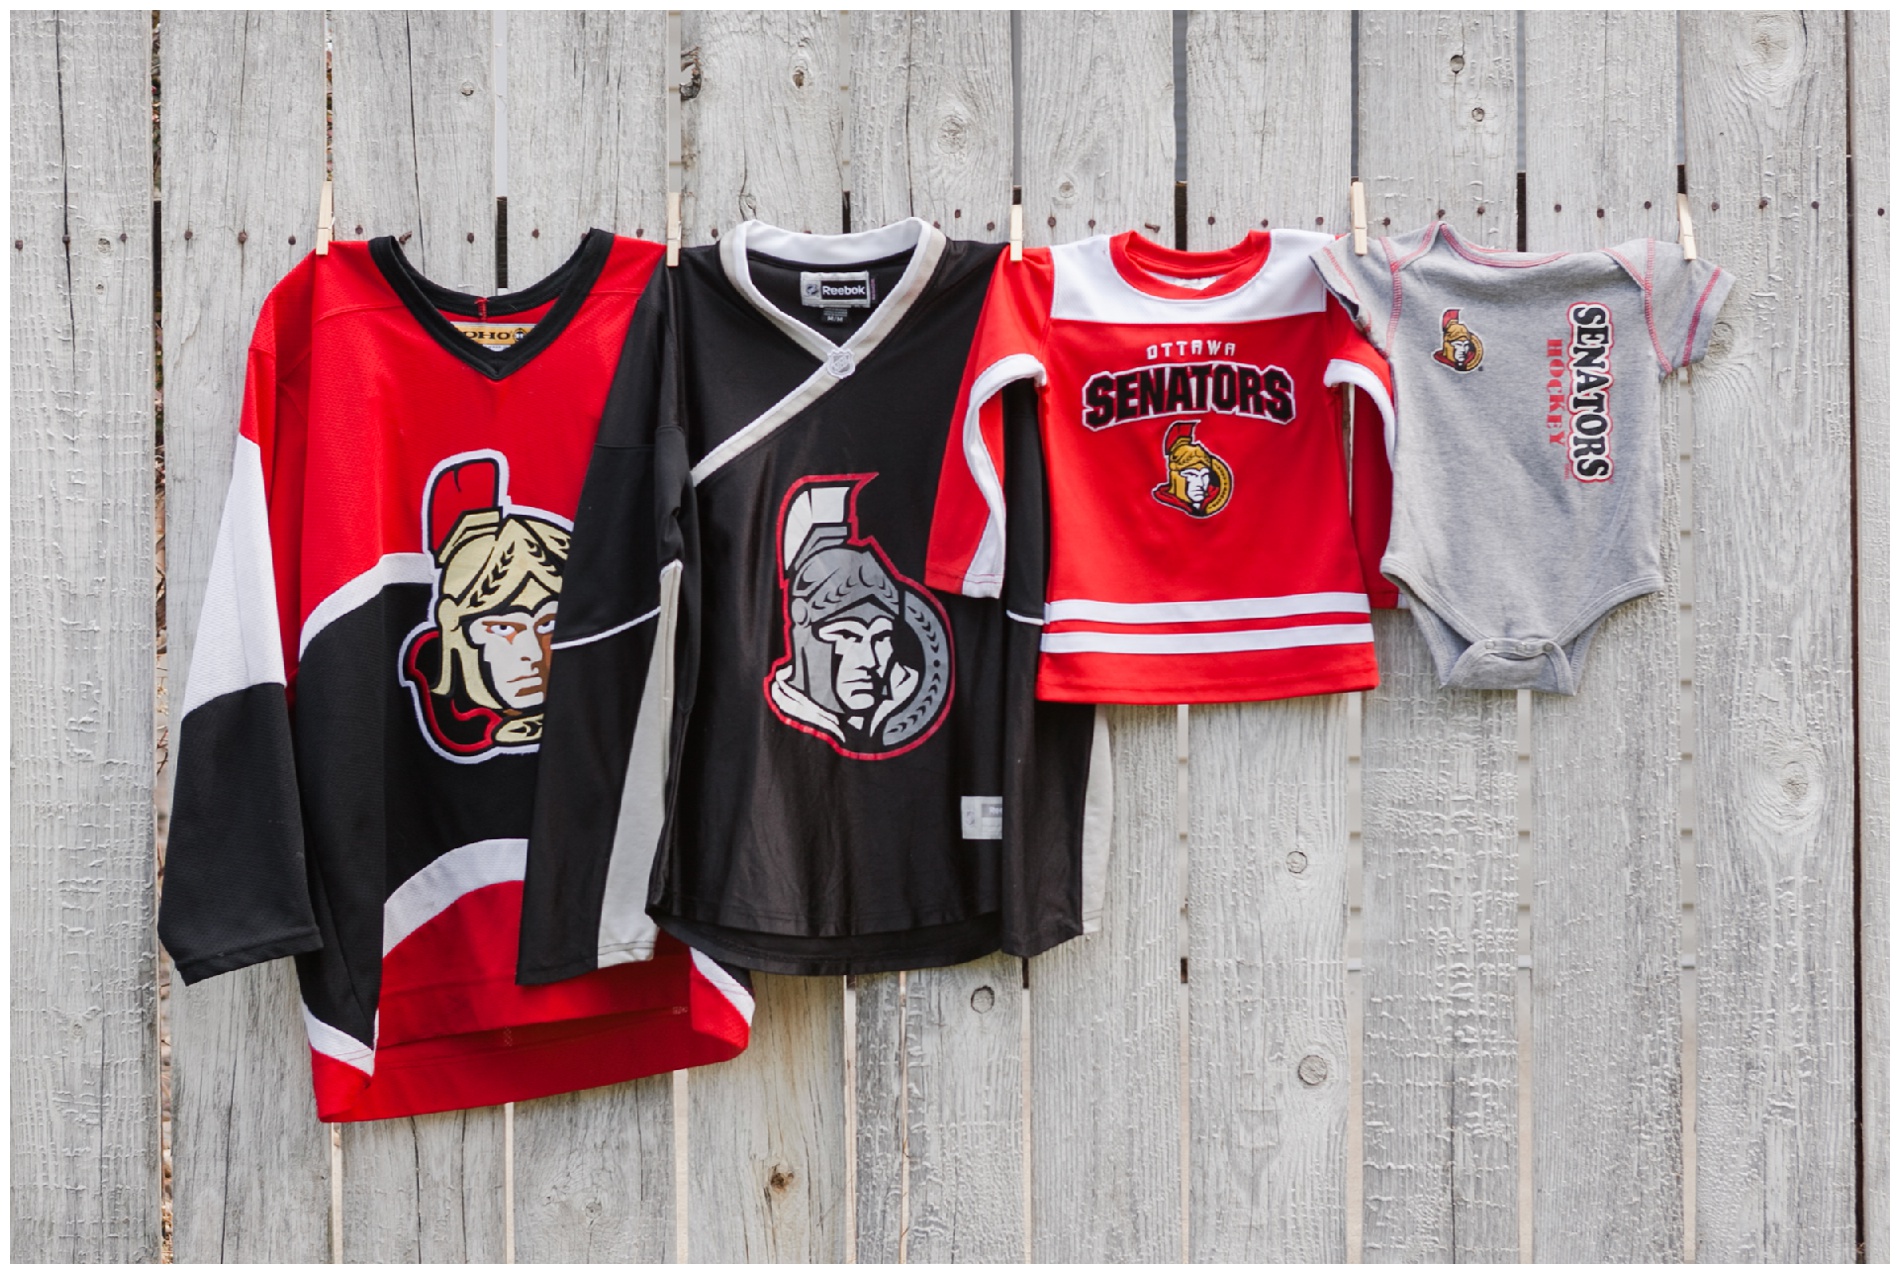 Pregnancy announcement: Two adults' Ottawa Senators jerseys, a toddler jersey, and a Senators baby onesie.